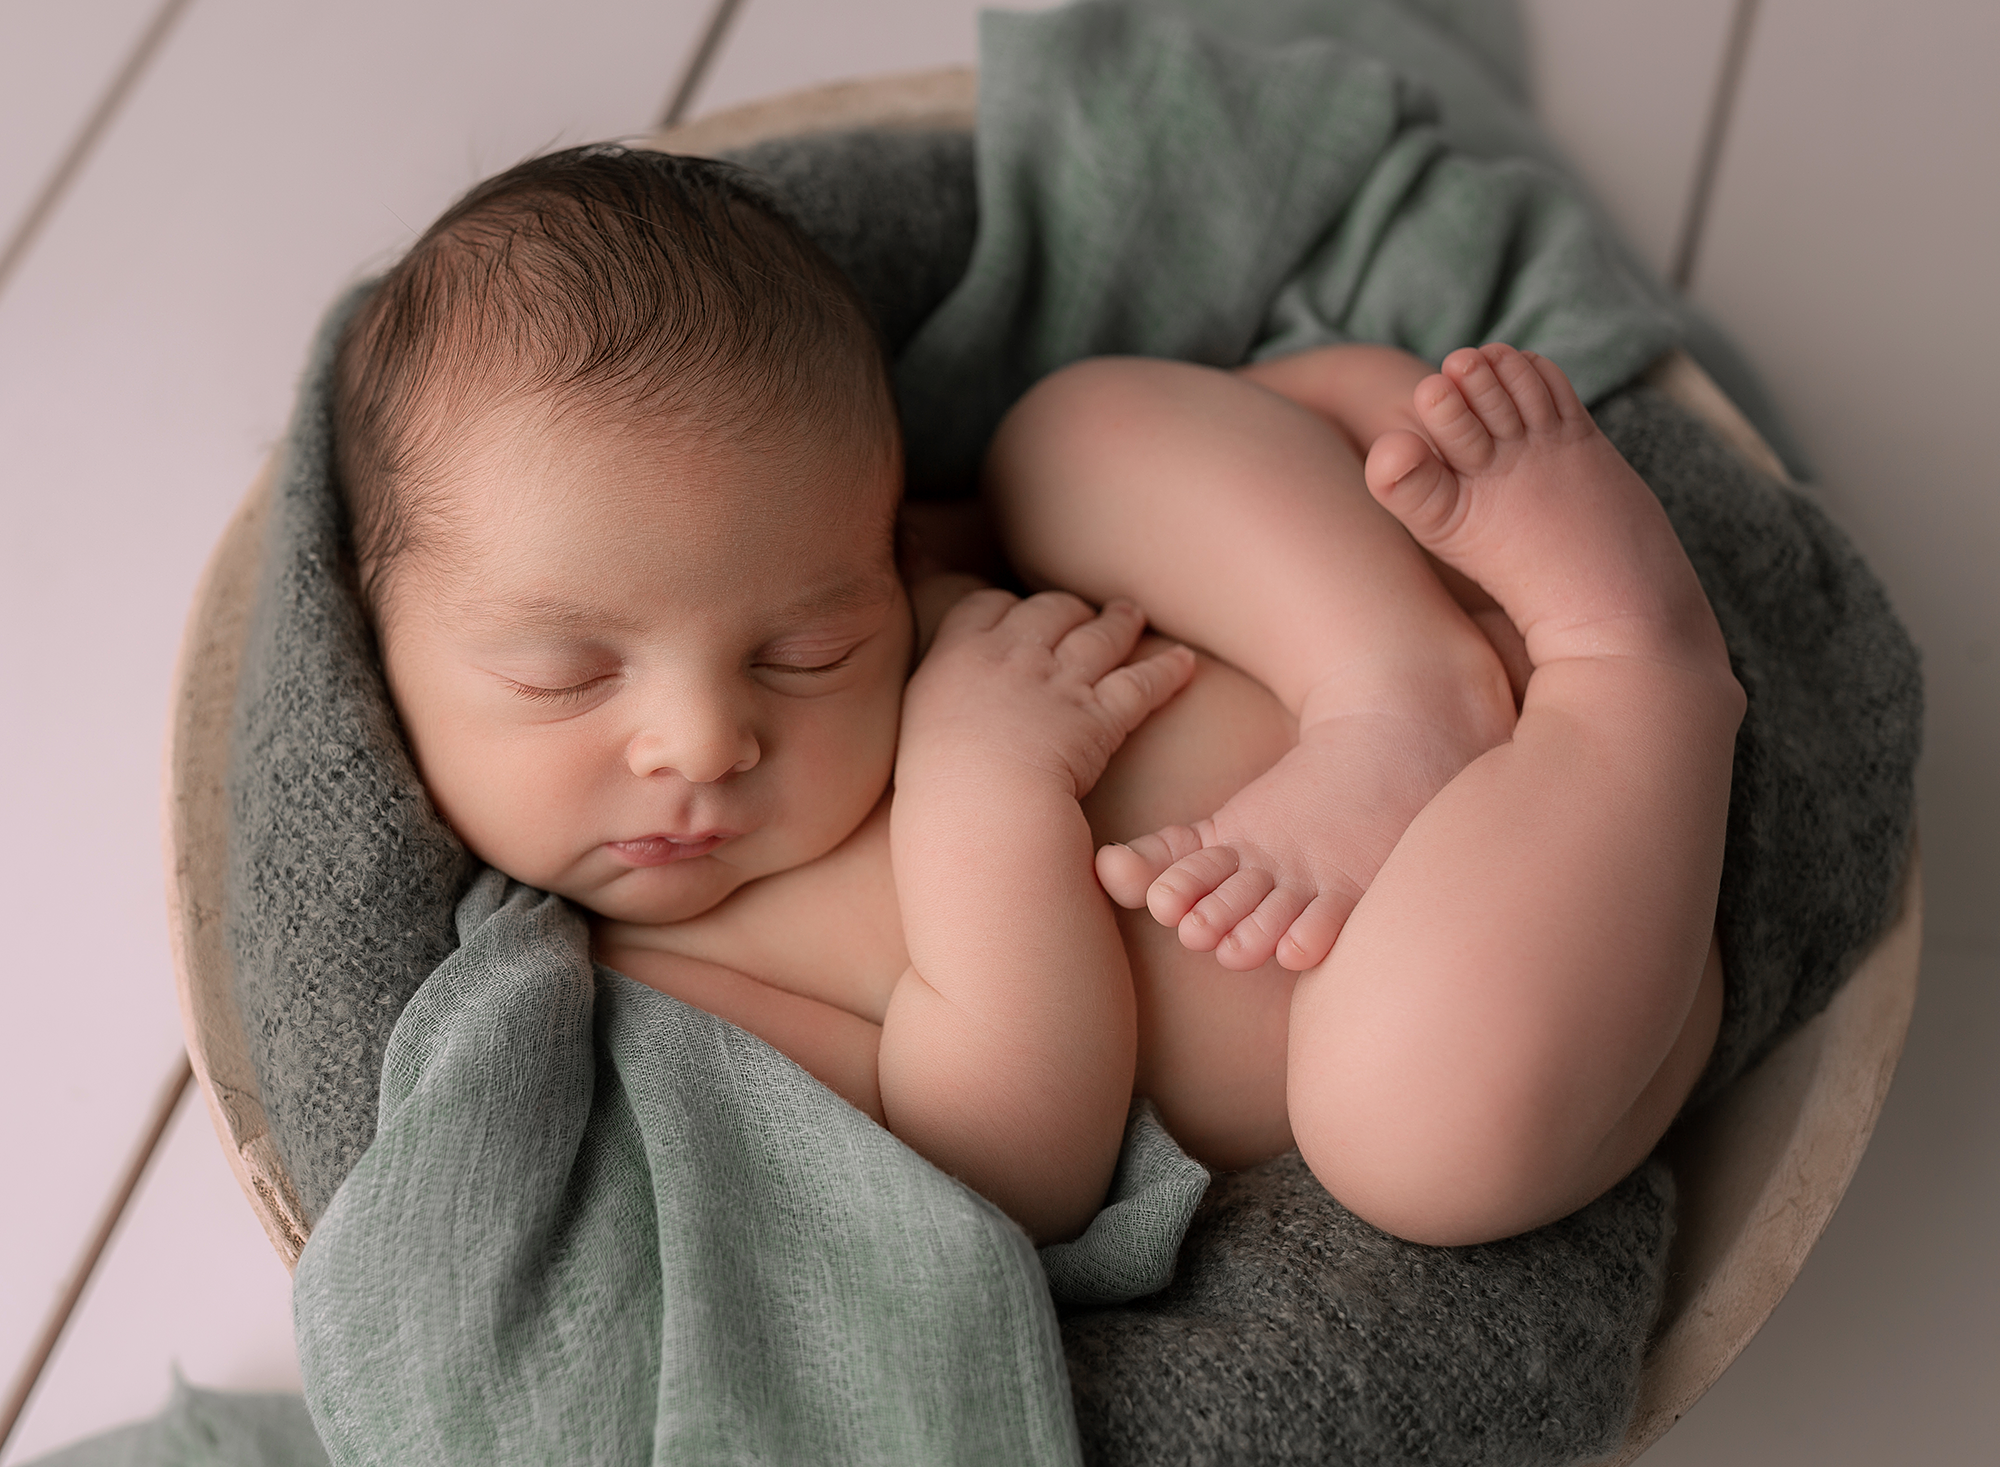 Sleeping photograph of a newborn baby